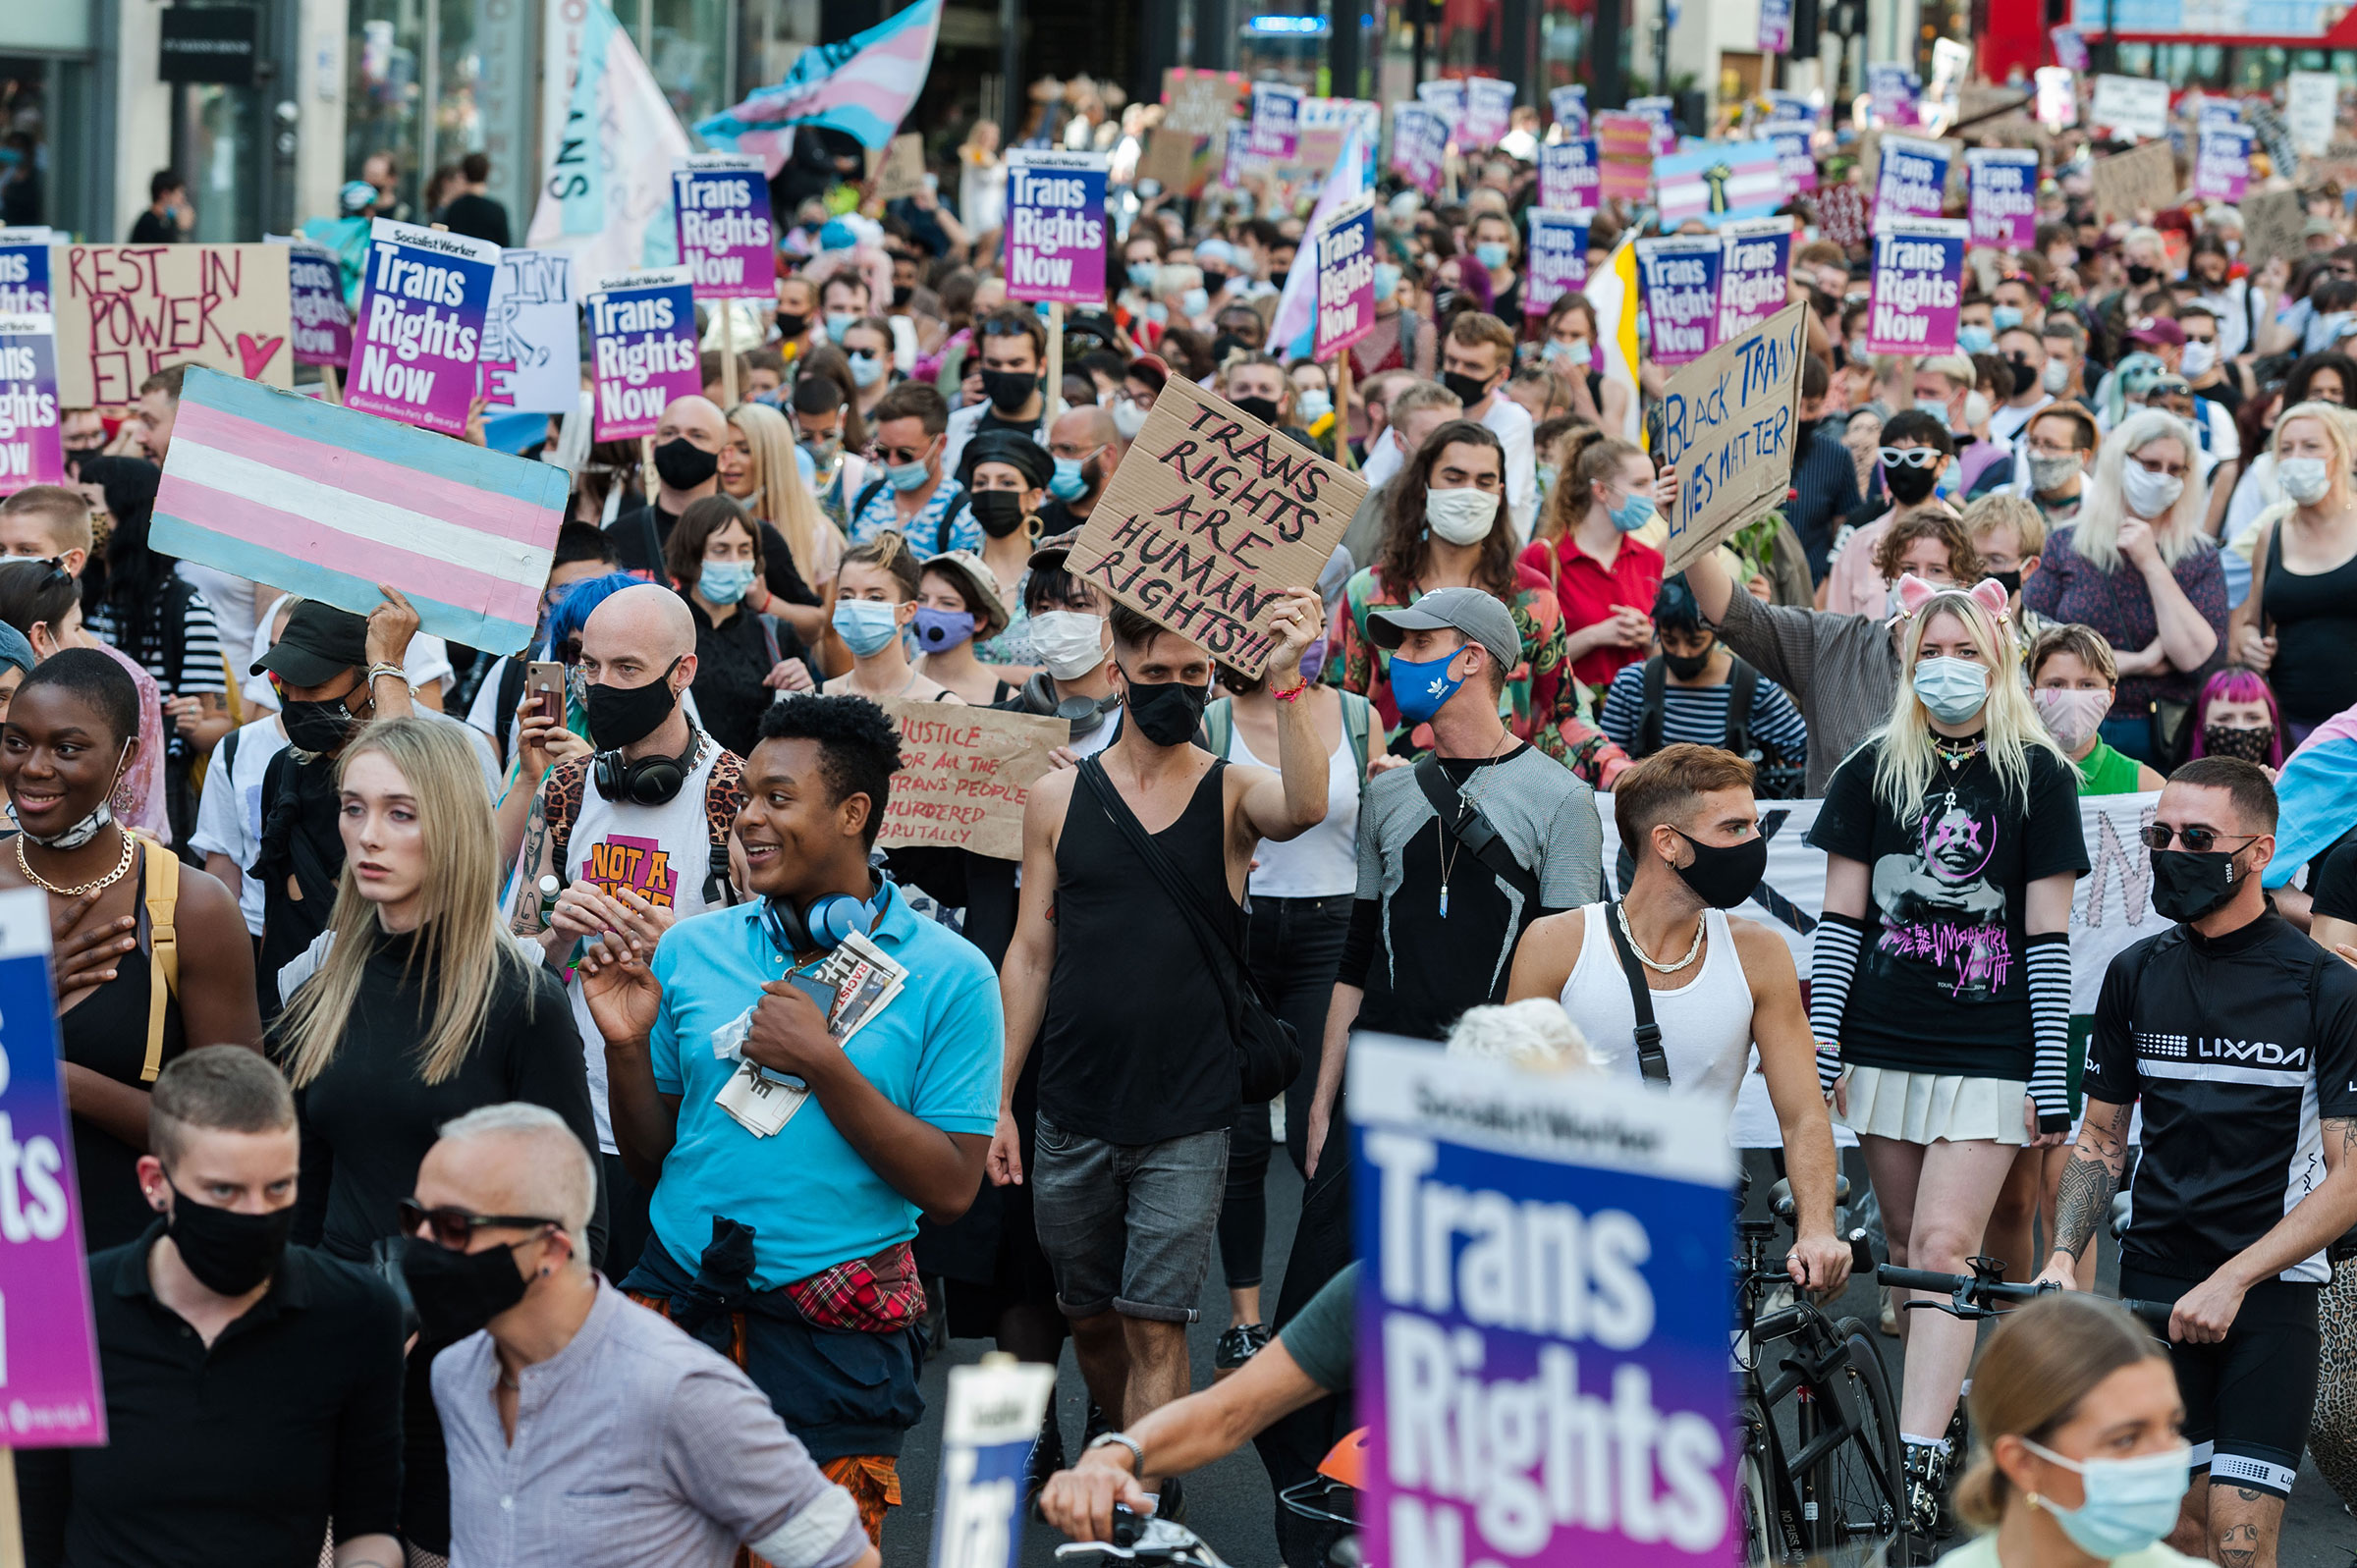 Trans Pride Protest in London